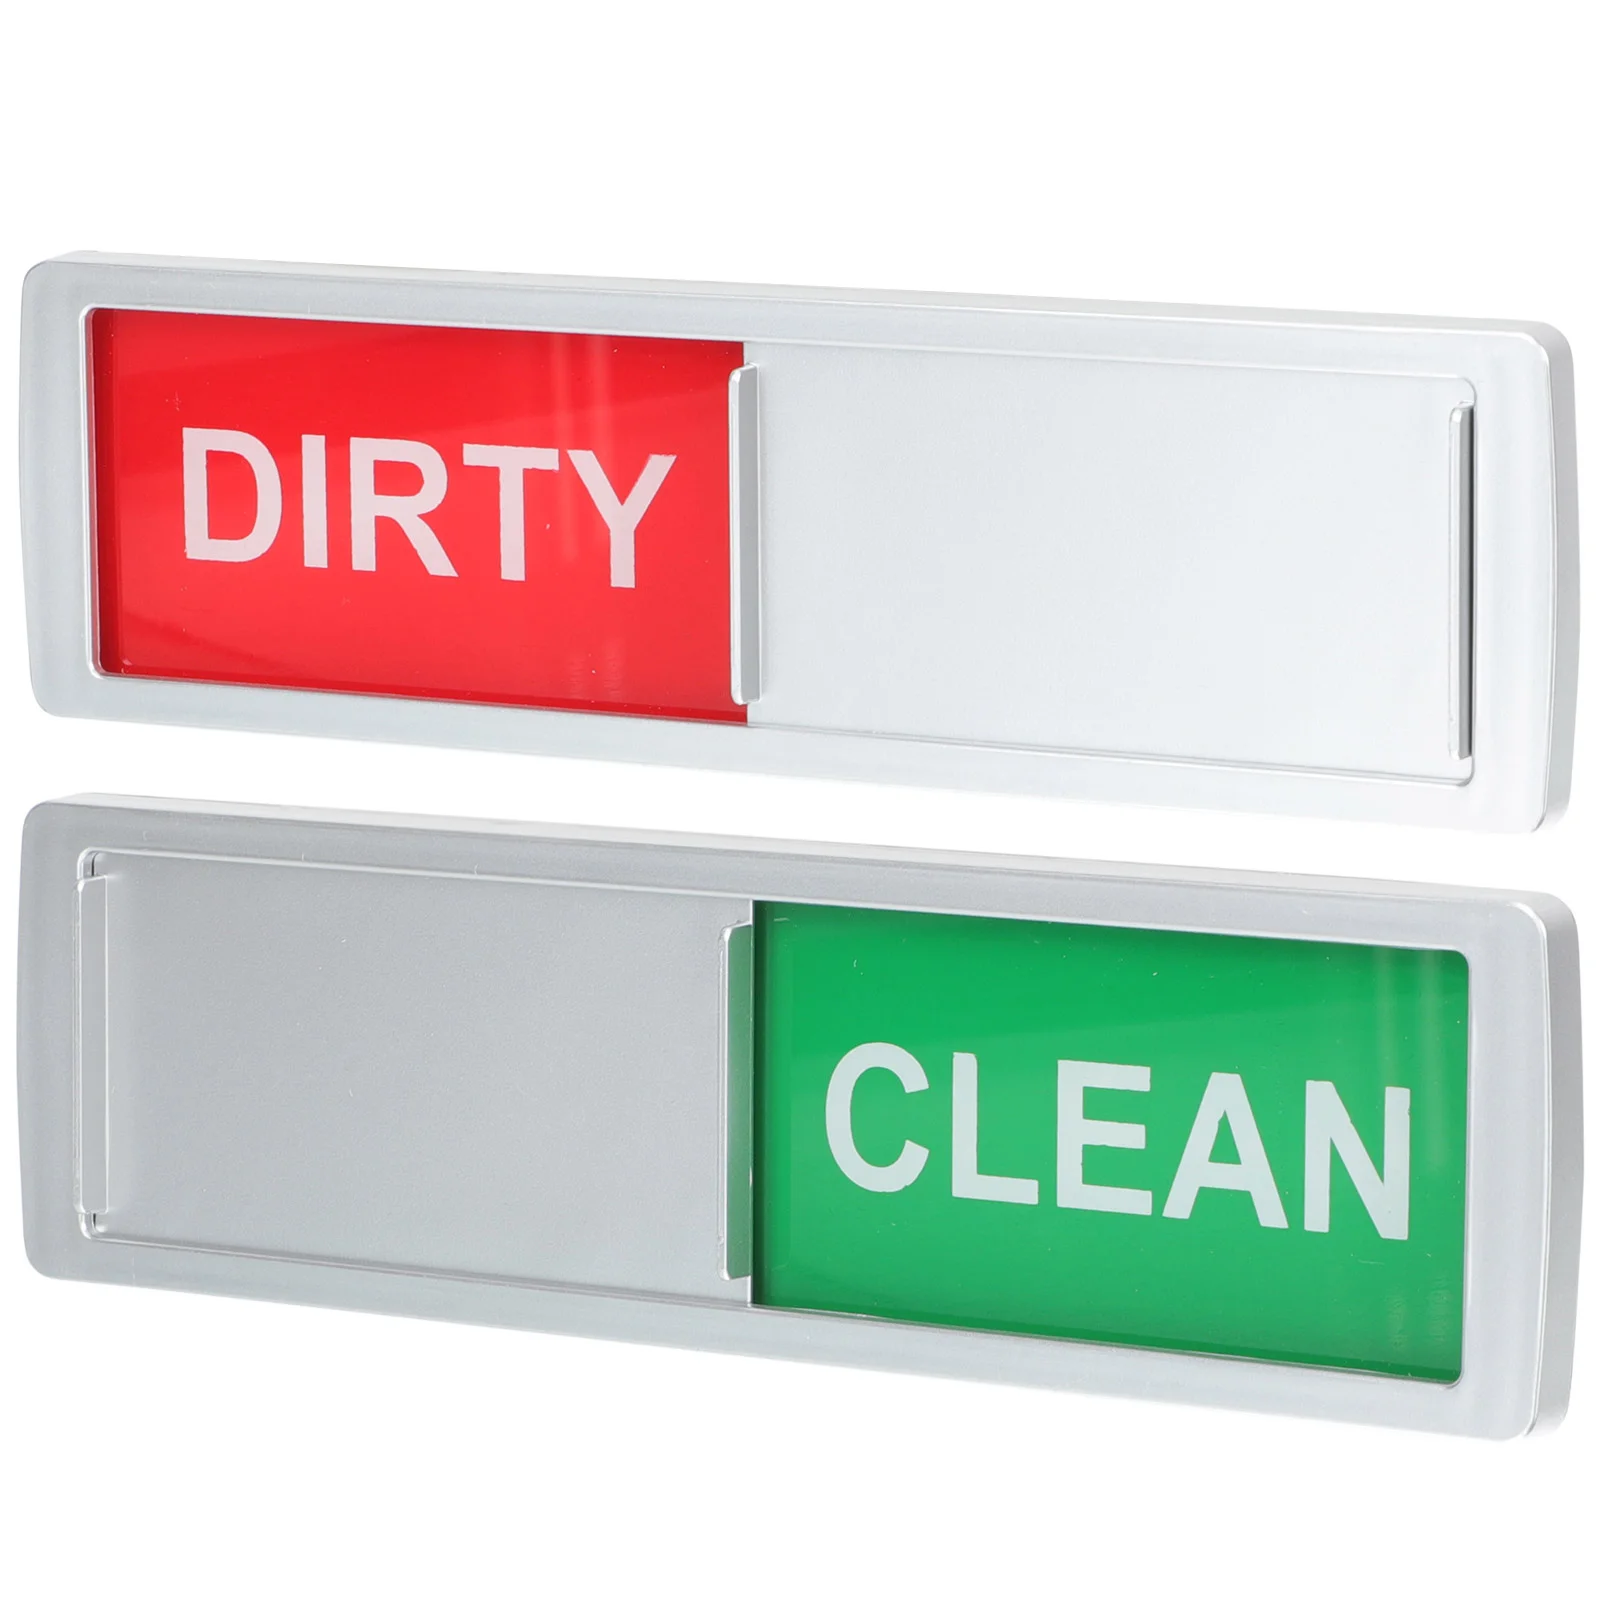 

2 Pcs Magnet Letters Fridge Dishwasher Sliding Indicator Washing Machine Dryer Signs Abs Clean Dirty Magnet